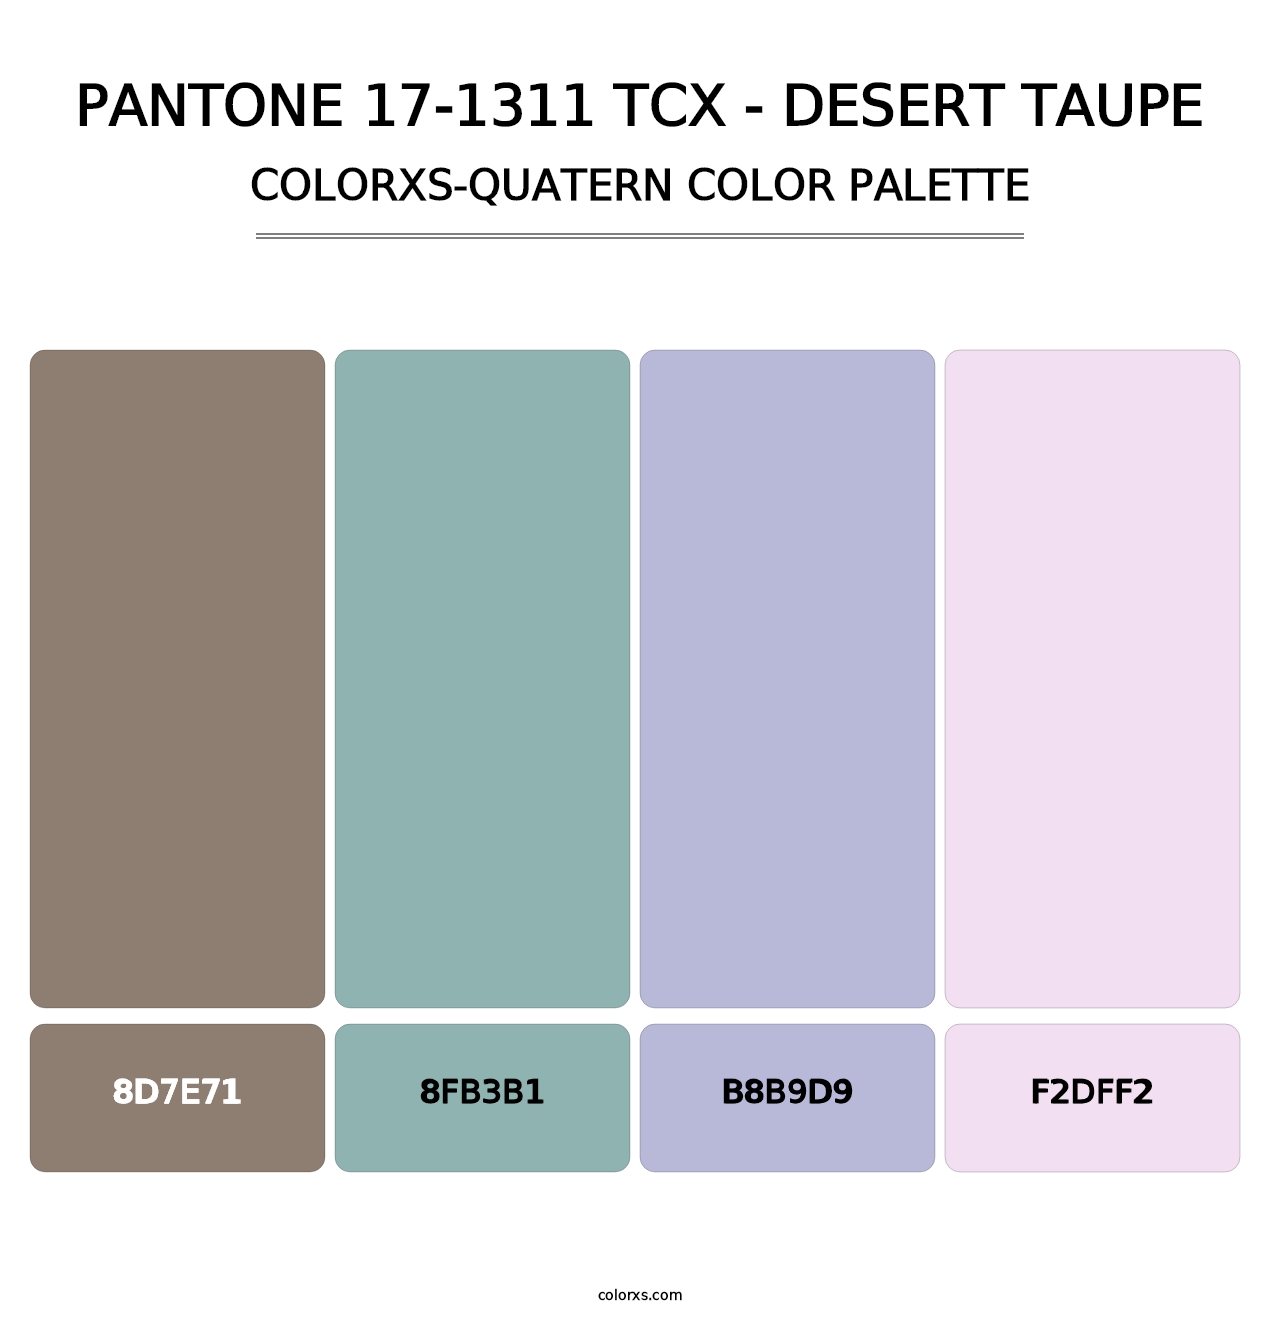 PANTONE 17-1311 TCX - Desert Taupe - Colorxs Quatern Palette